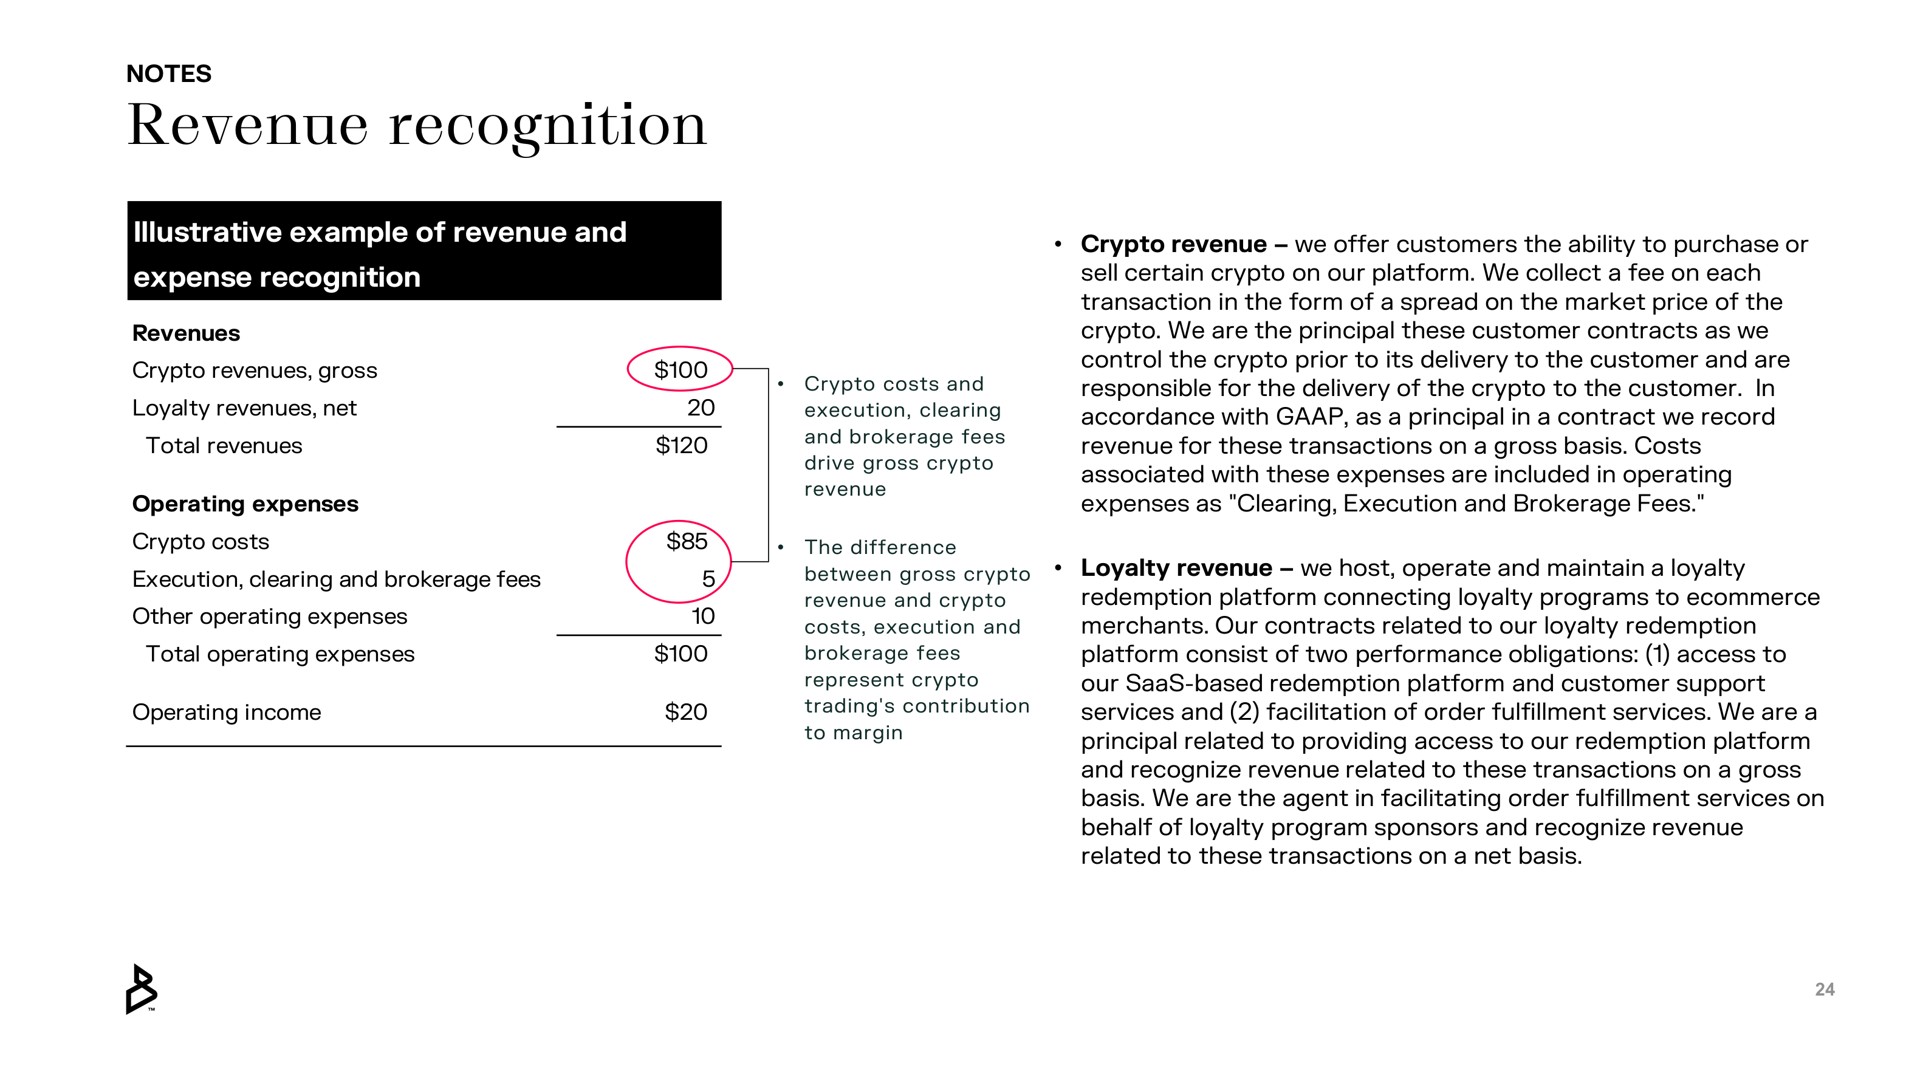 revenue recognition | Bakkt